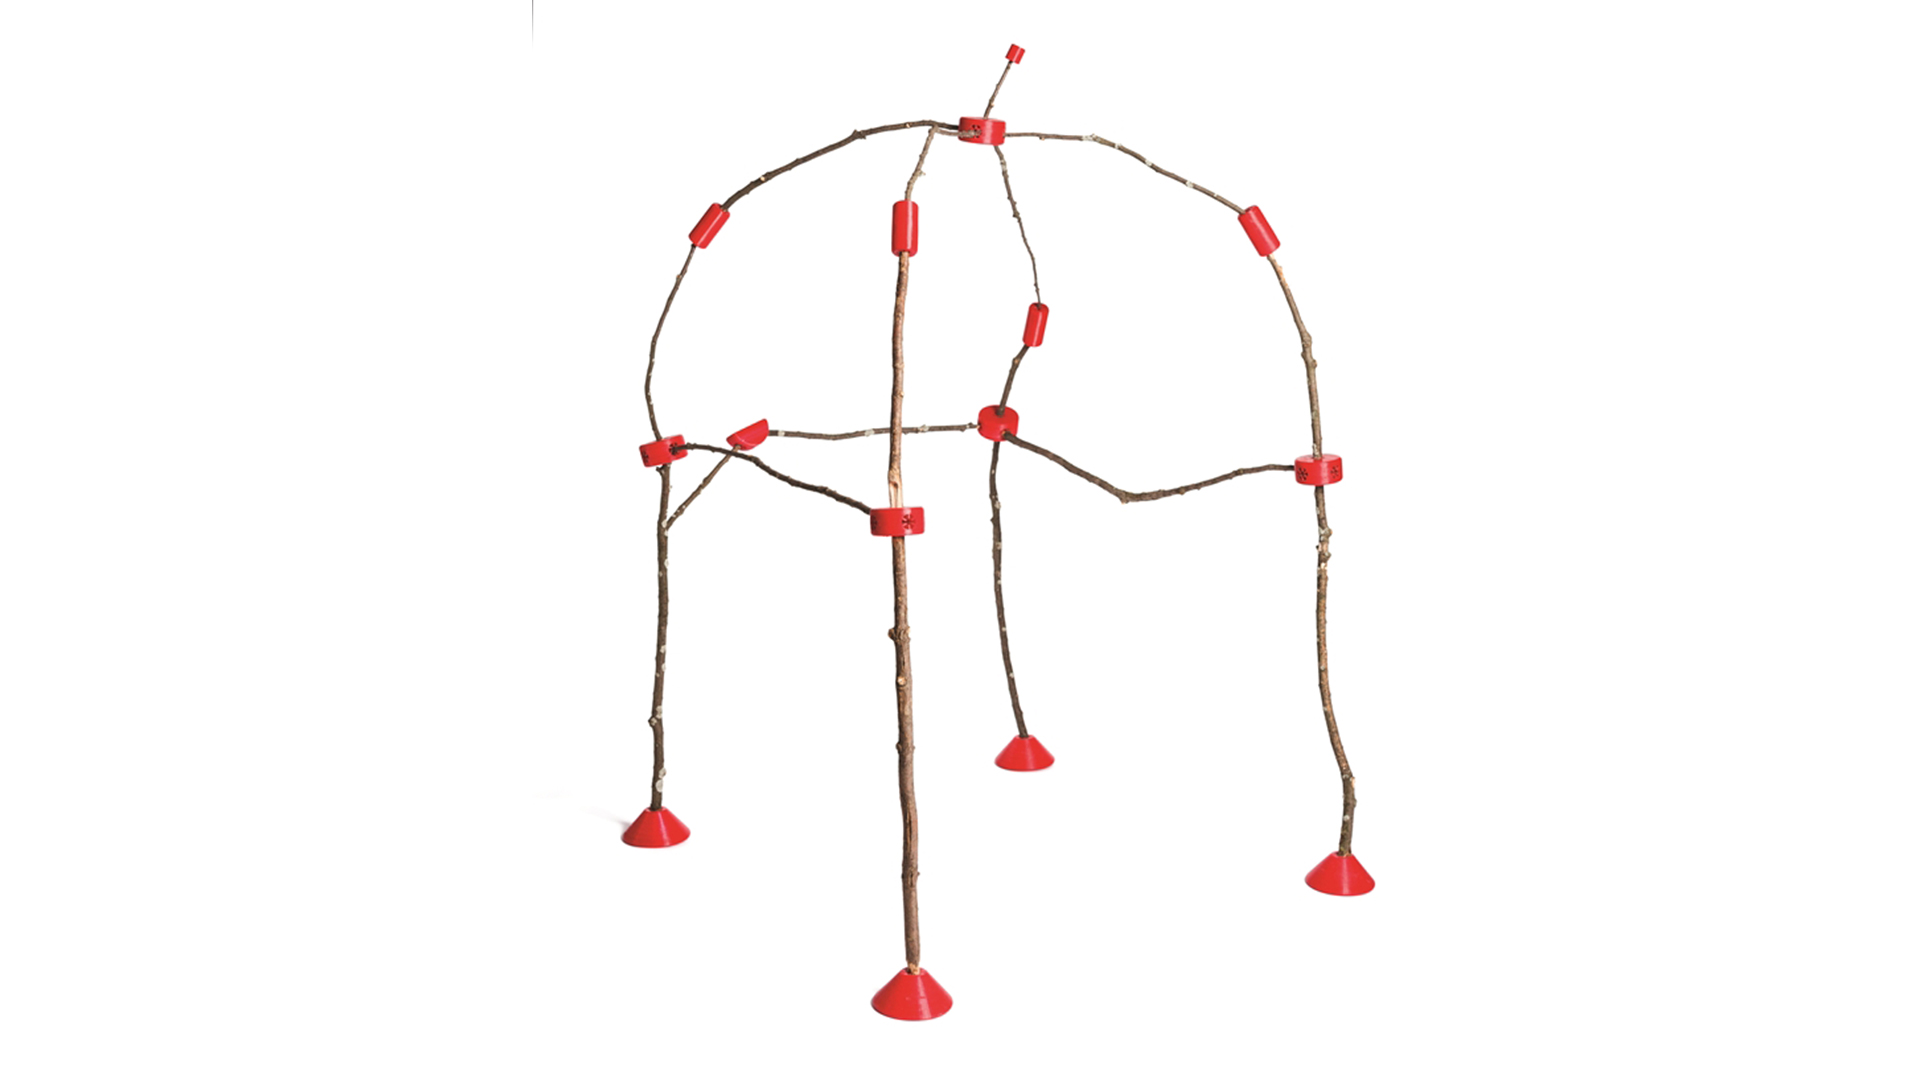 Stick Connectors assembled into dome structure